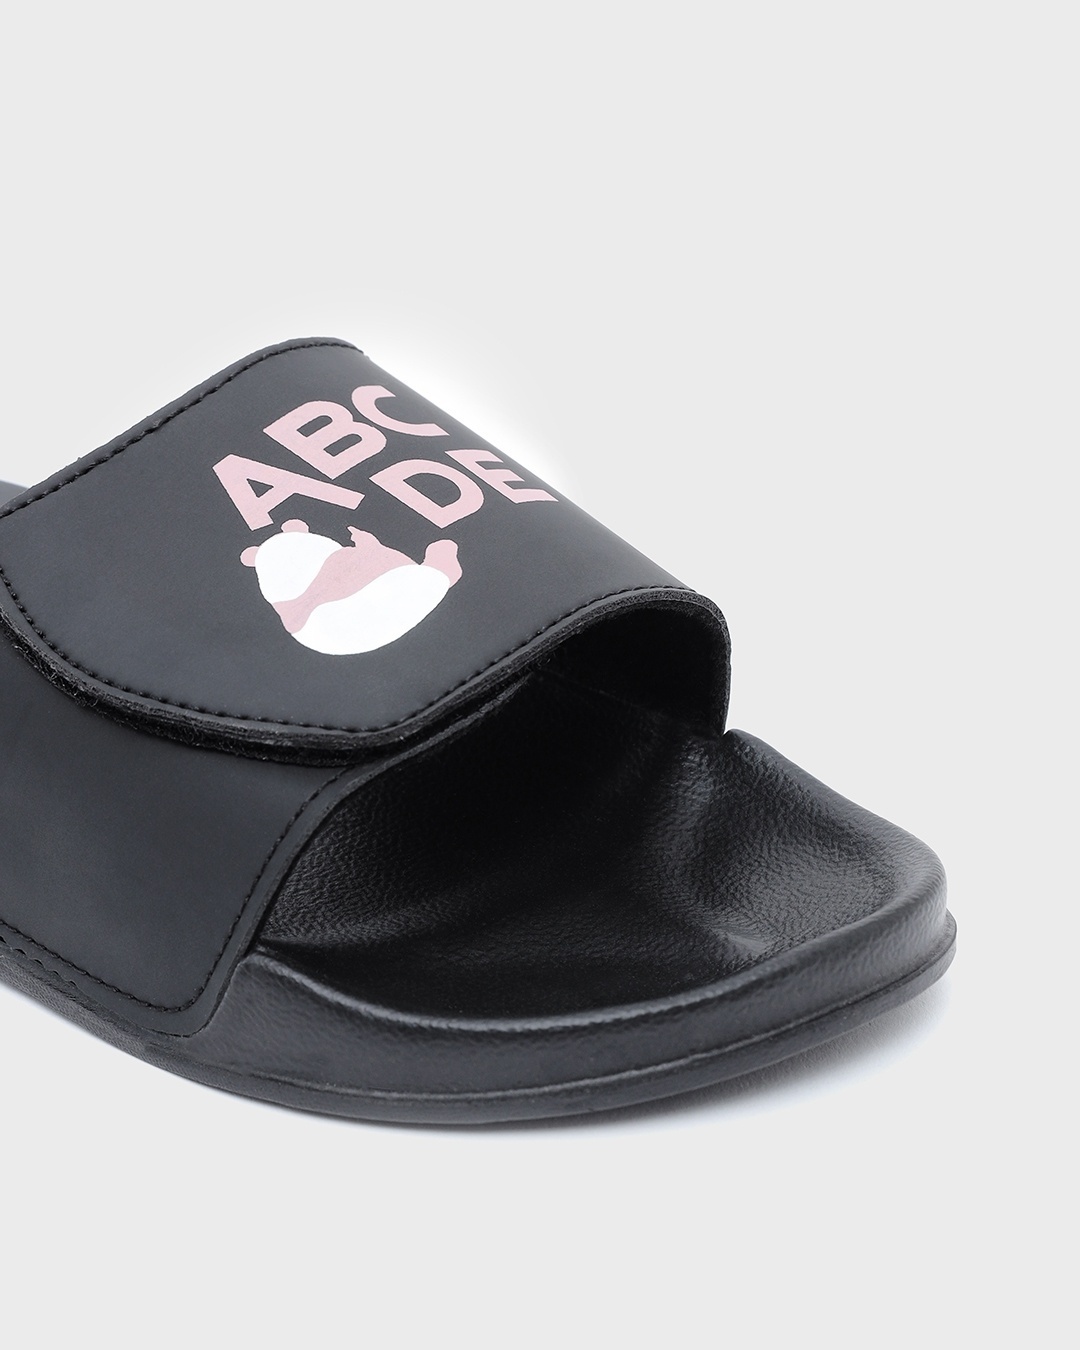 Shop Men's Black Panda ABCD Typography Adjustable Velcro Slider